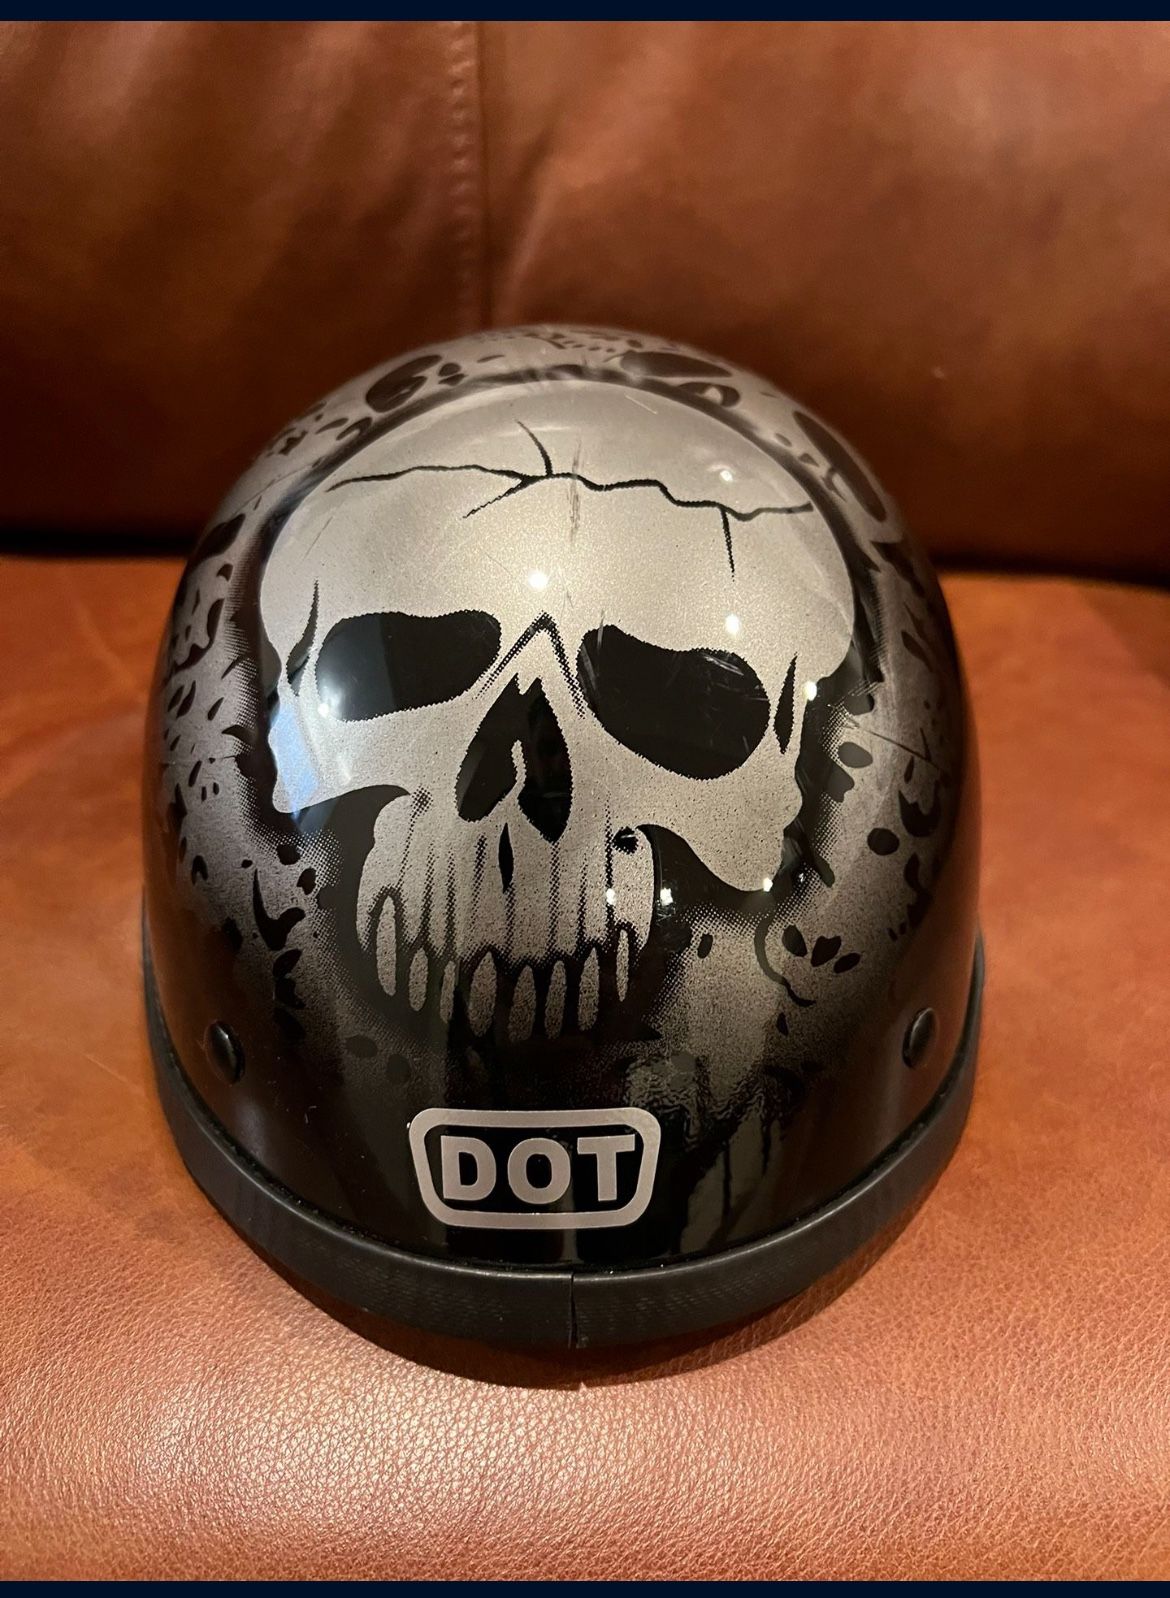 Skull Motorcycle Helmet (DOT) Large